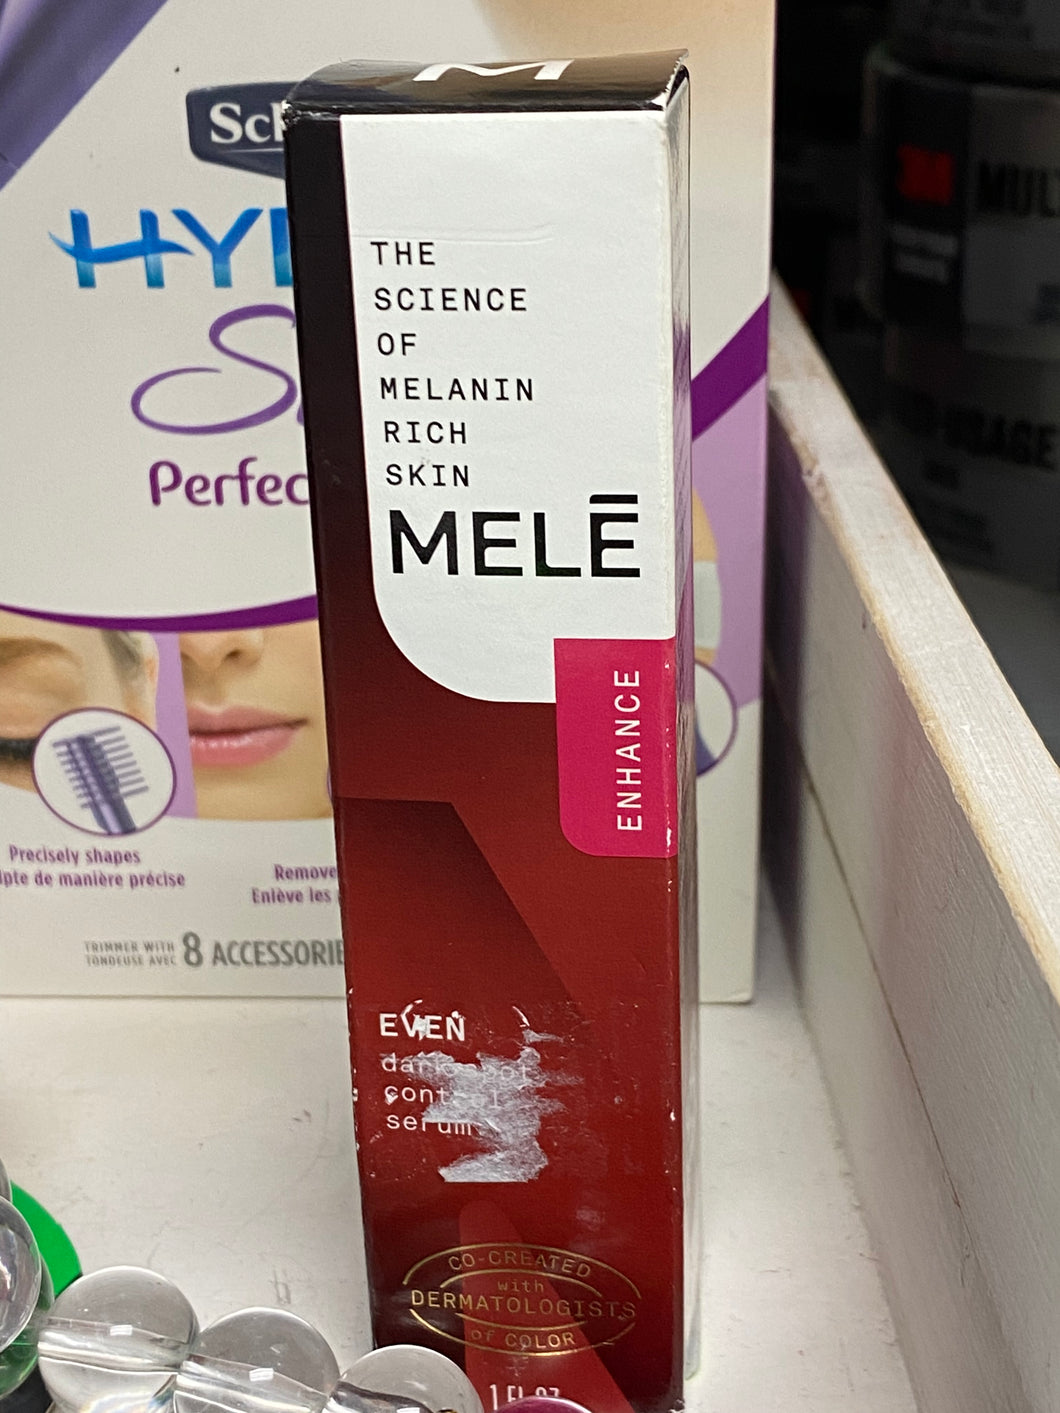 MELE Even Dark Spot Control Facial Serum for Melanin Rich Skin - 1 fl oz